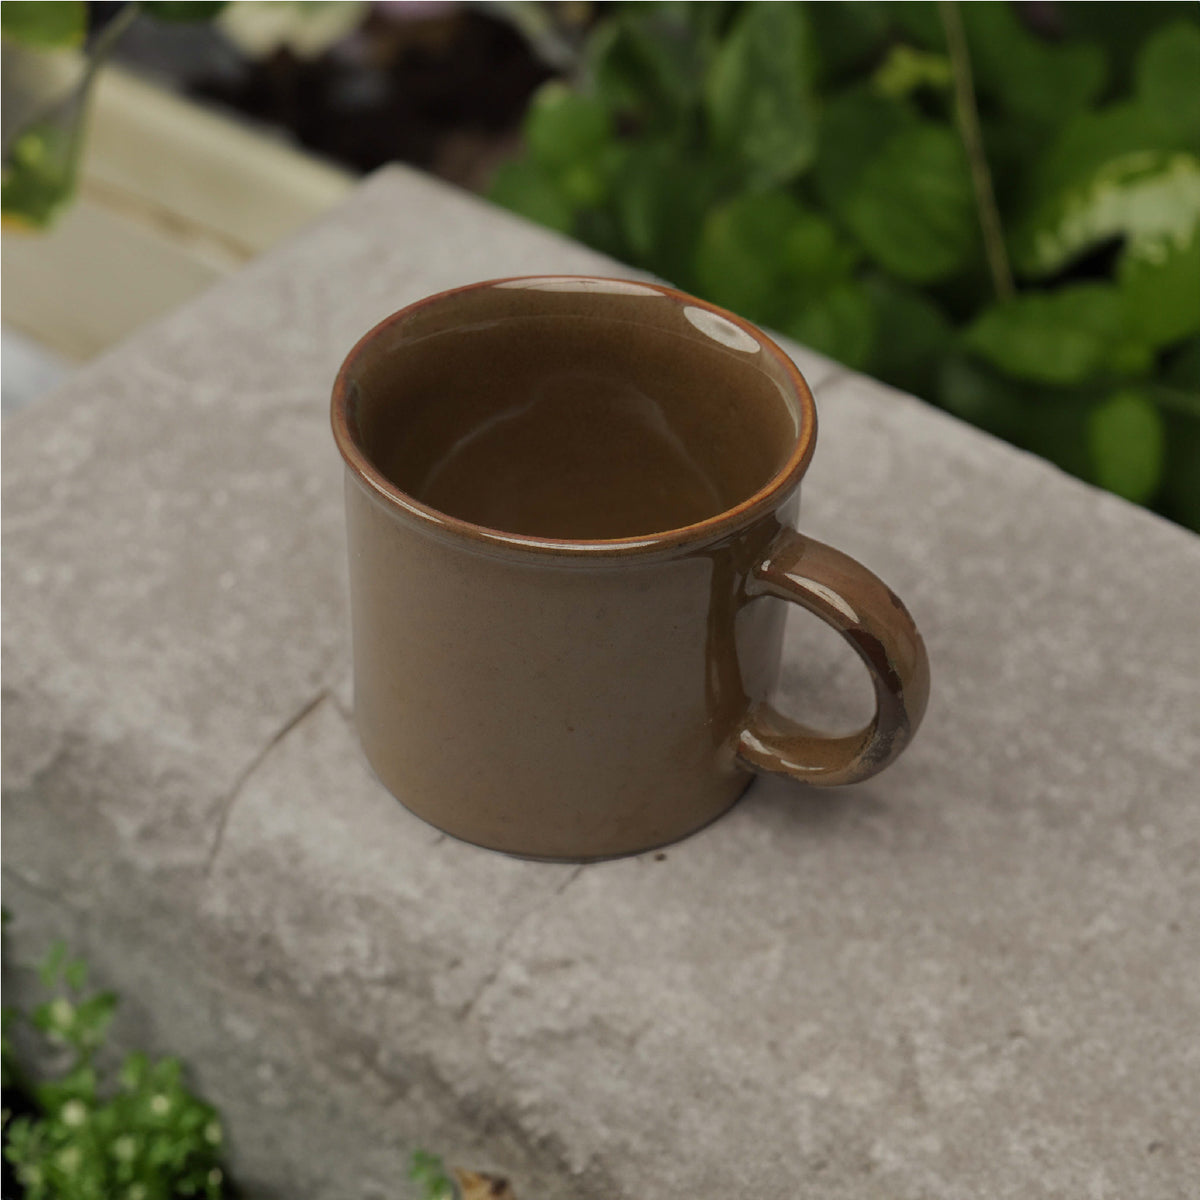 Claymistry Ceramic Mug Combo | Set of 2 | Light Brown | Coffee Mugs | Ceramic Combos | Tea Kettles | 11.5*9*7.5 cms | Glossy